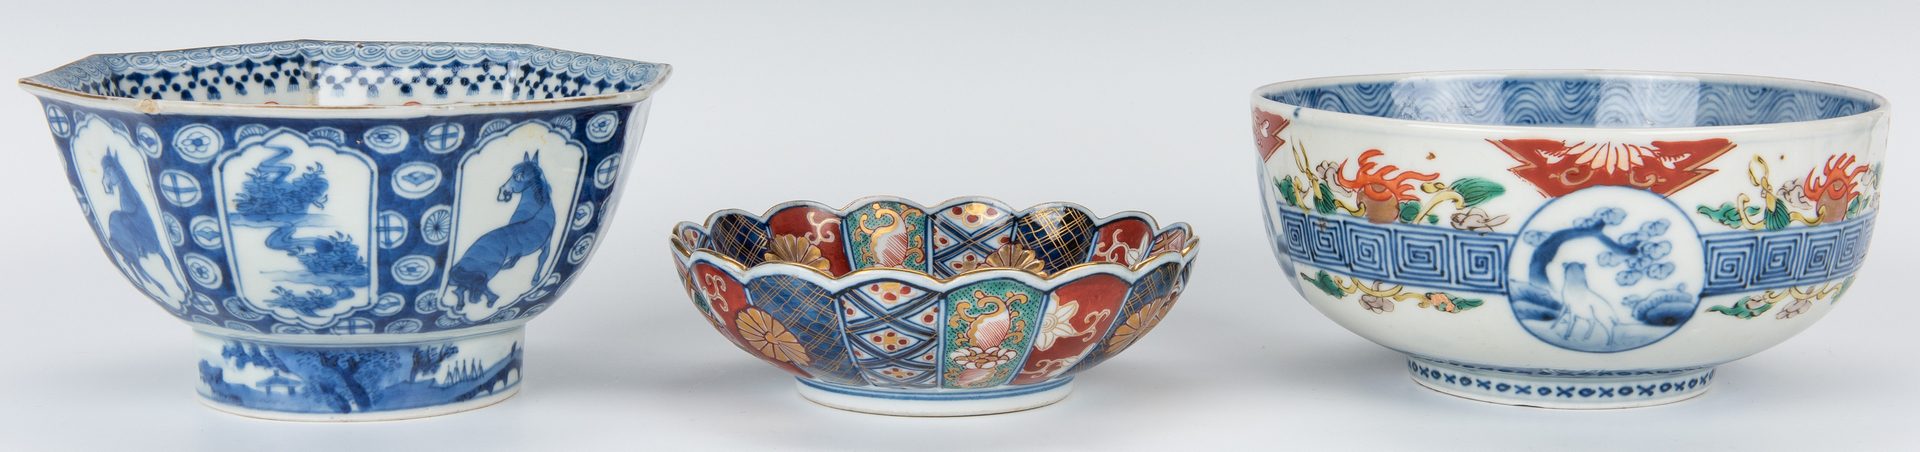 Lot 198: 6 Asian Porcelain Bowls & Plates, inc. Imari